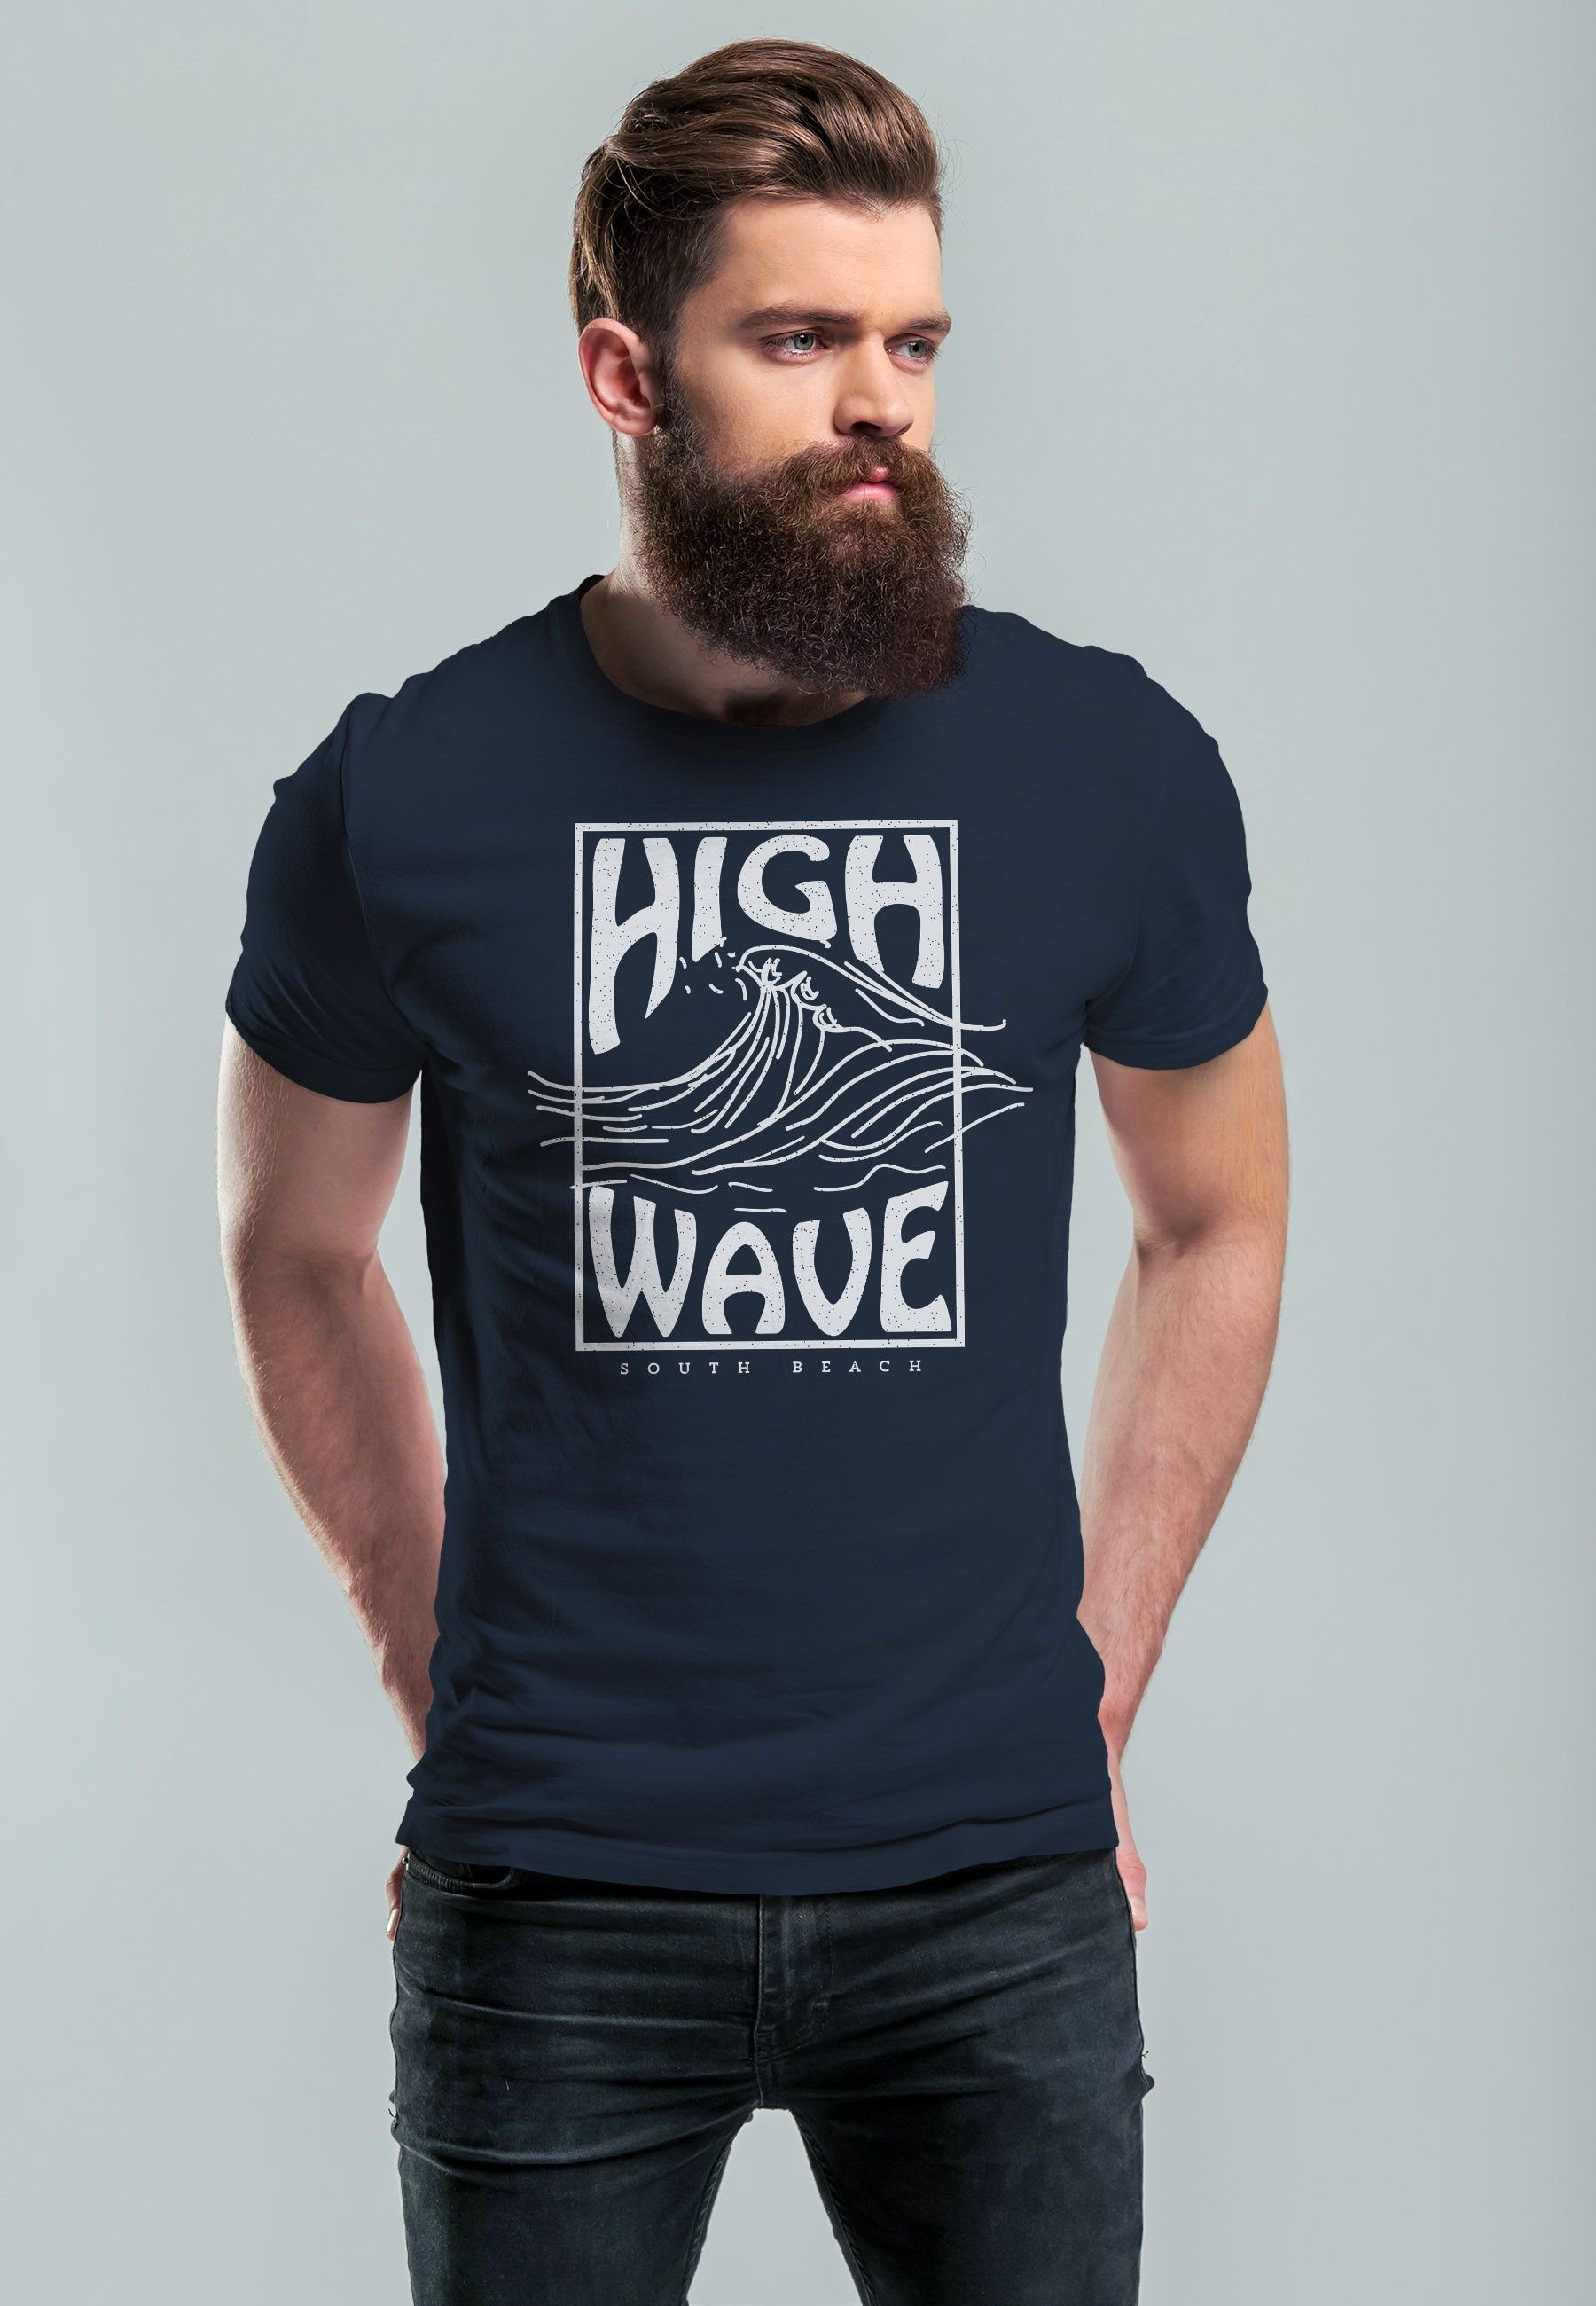 Neverless Print-Shirt Print Surfing Art navy Schrift Logo T-Shirt Herren Aufdruck Welle High Line mit Wave